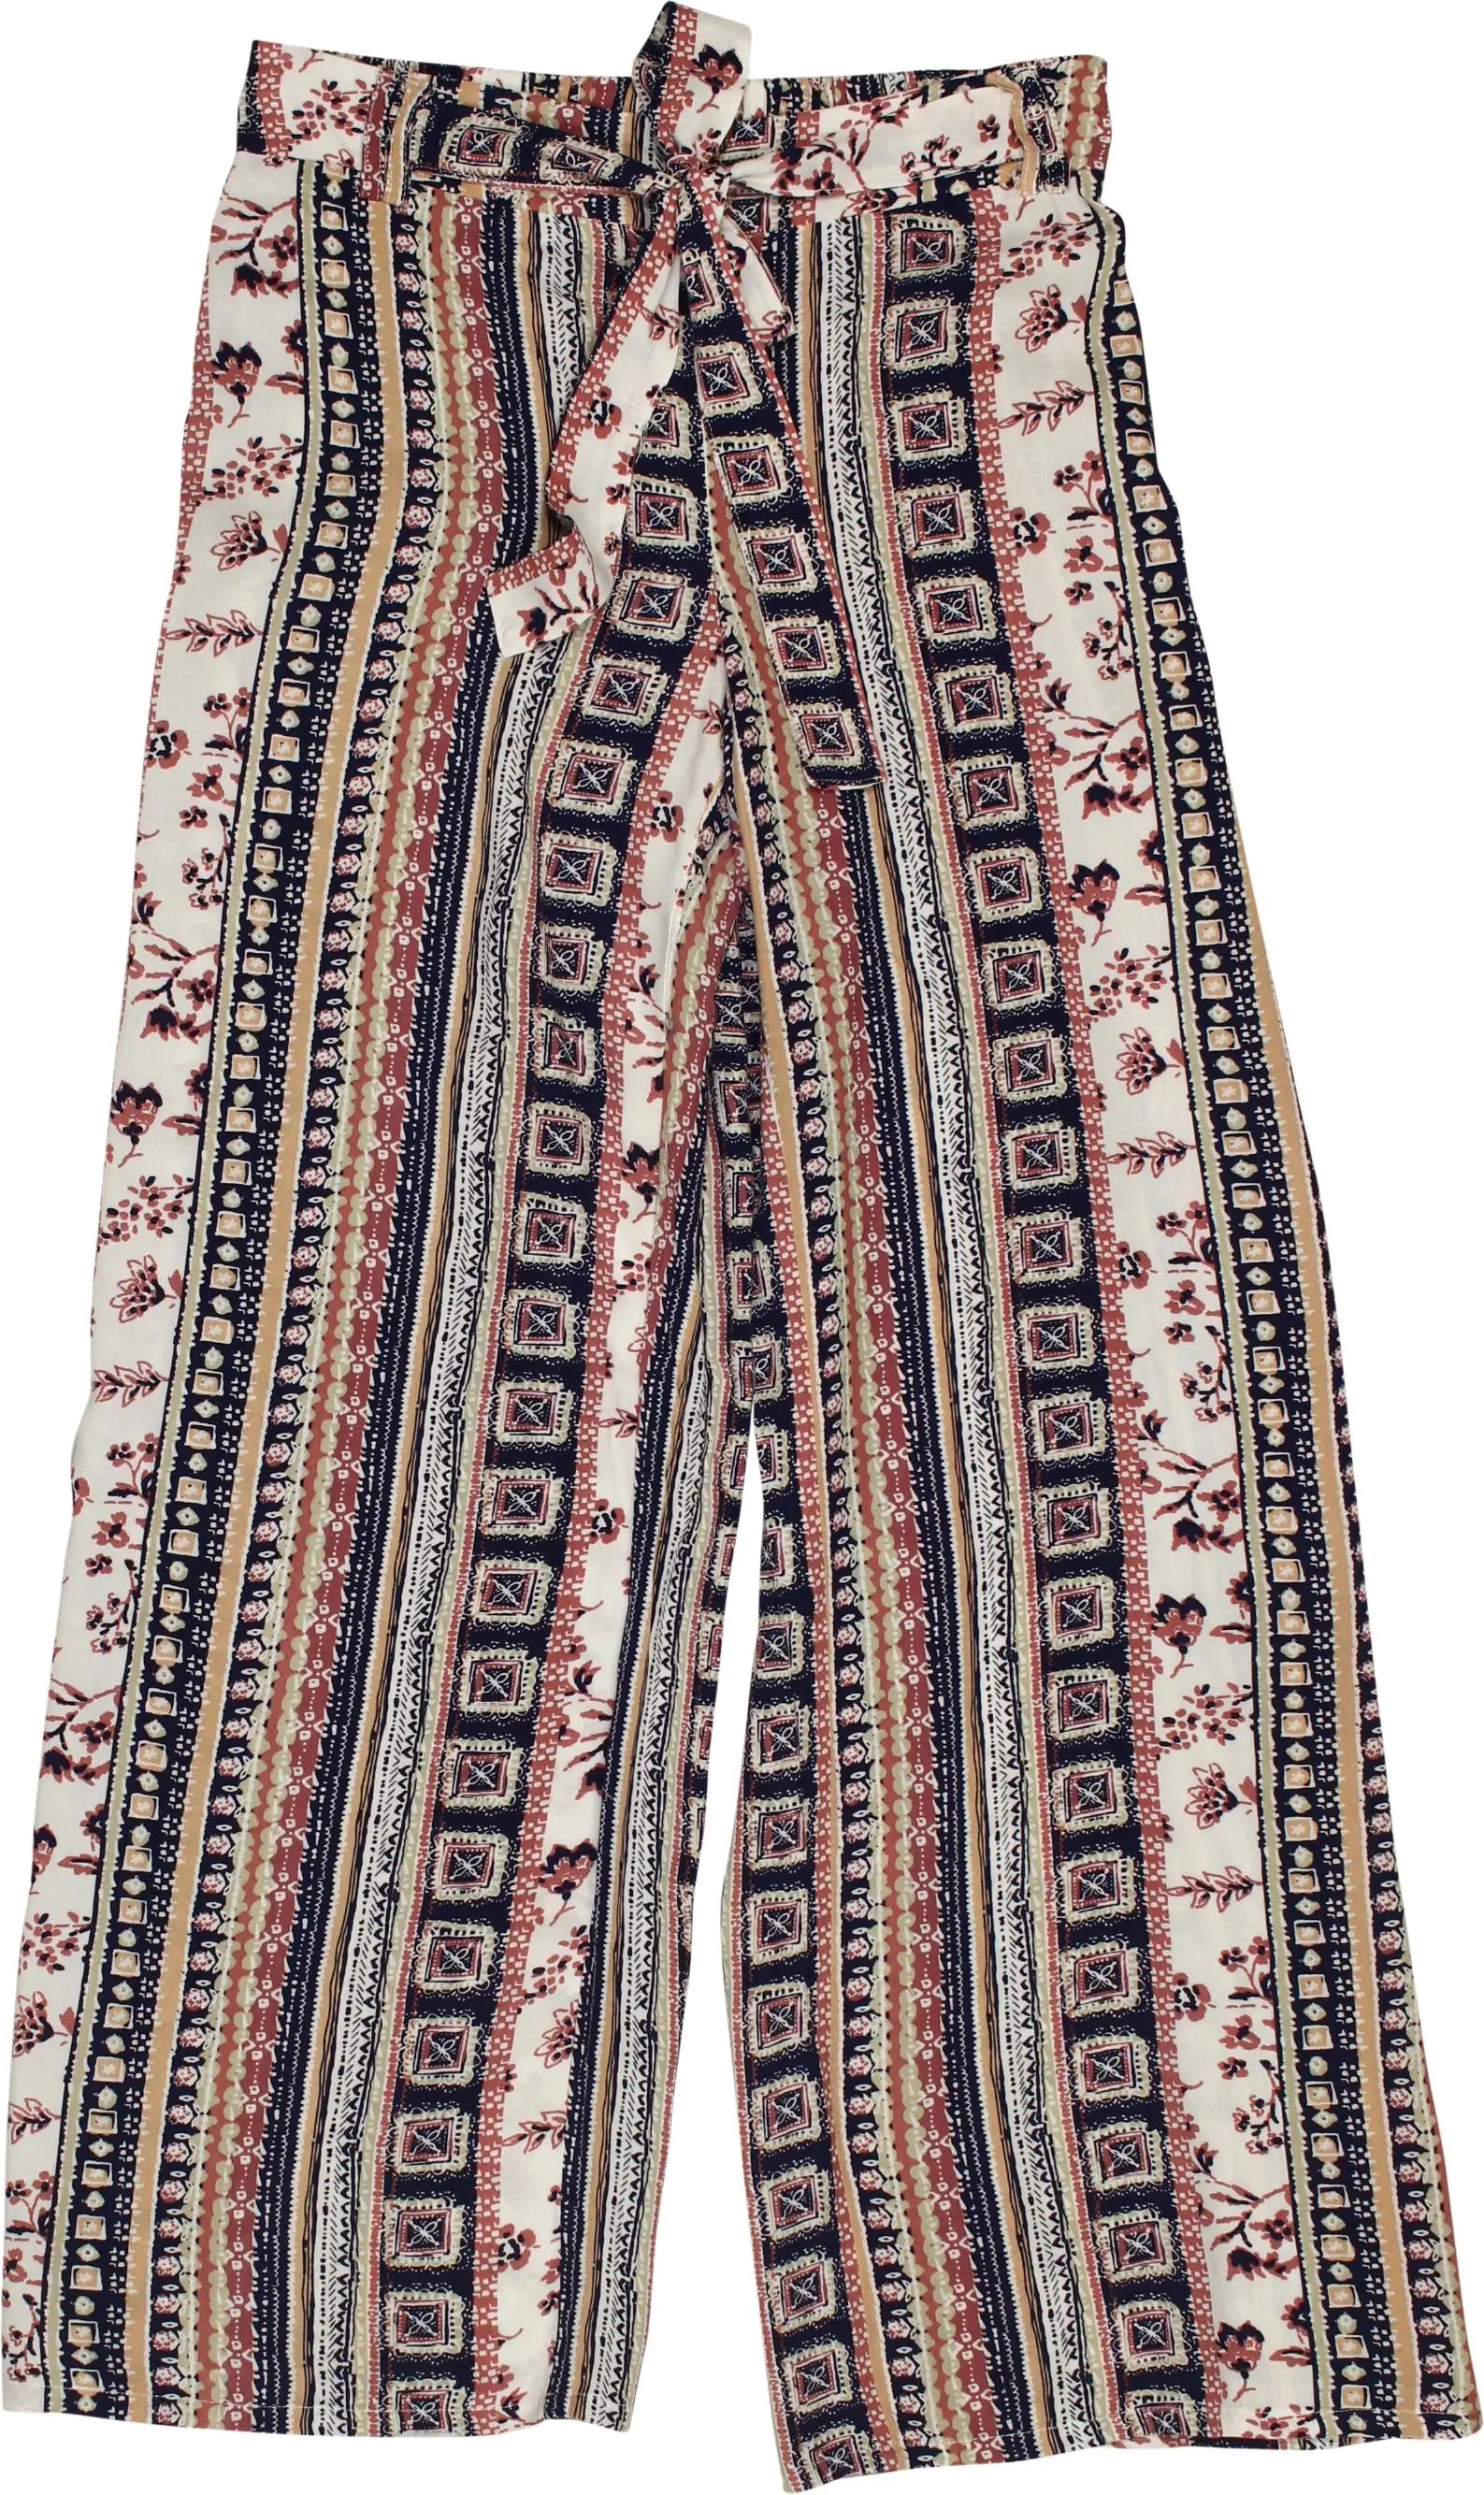 Joe B - Beach Pants- ThriftTale.com - Vintage and second handclothing